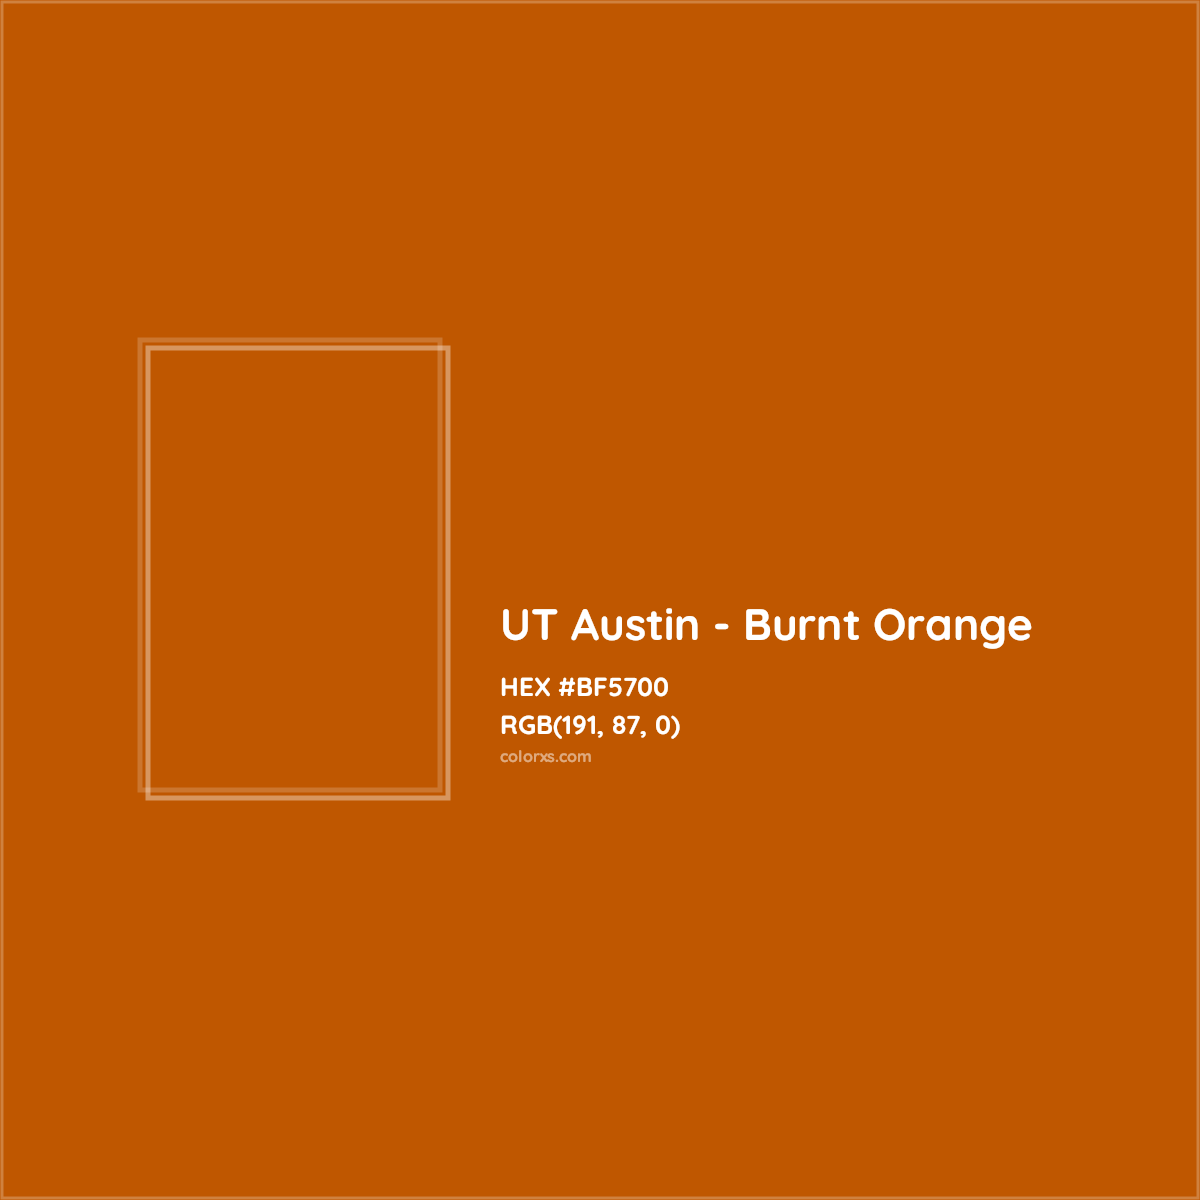 HEX #BF5700 UT Austin - Burnt Orange Other School - Color Code